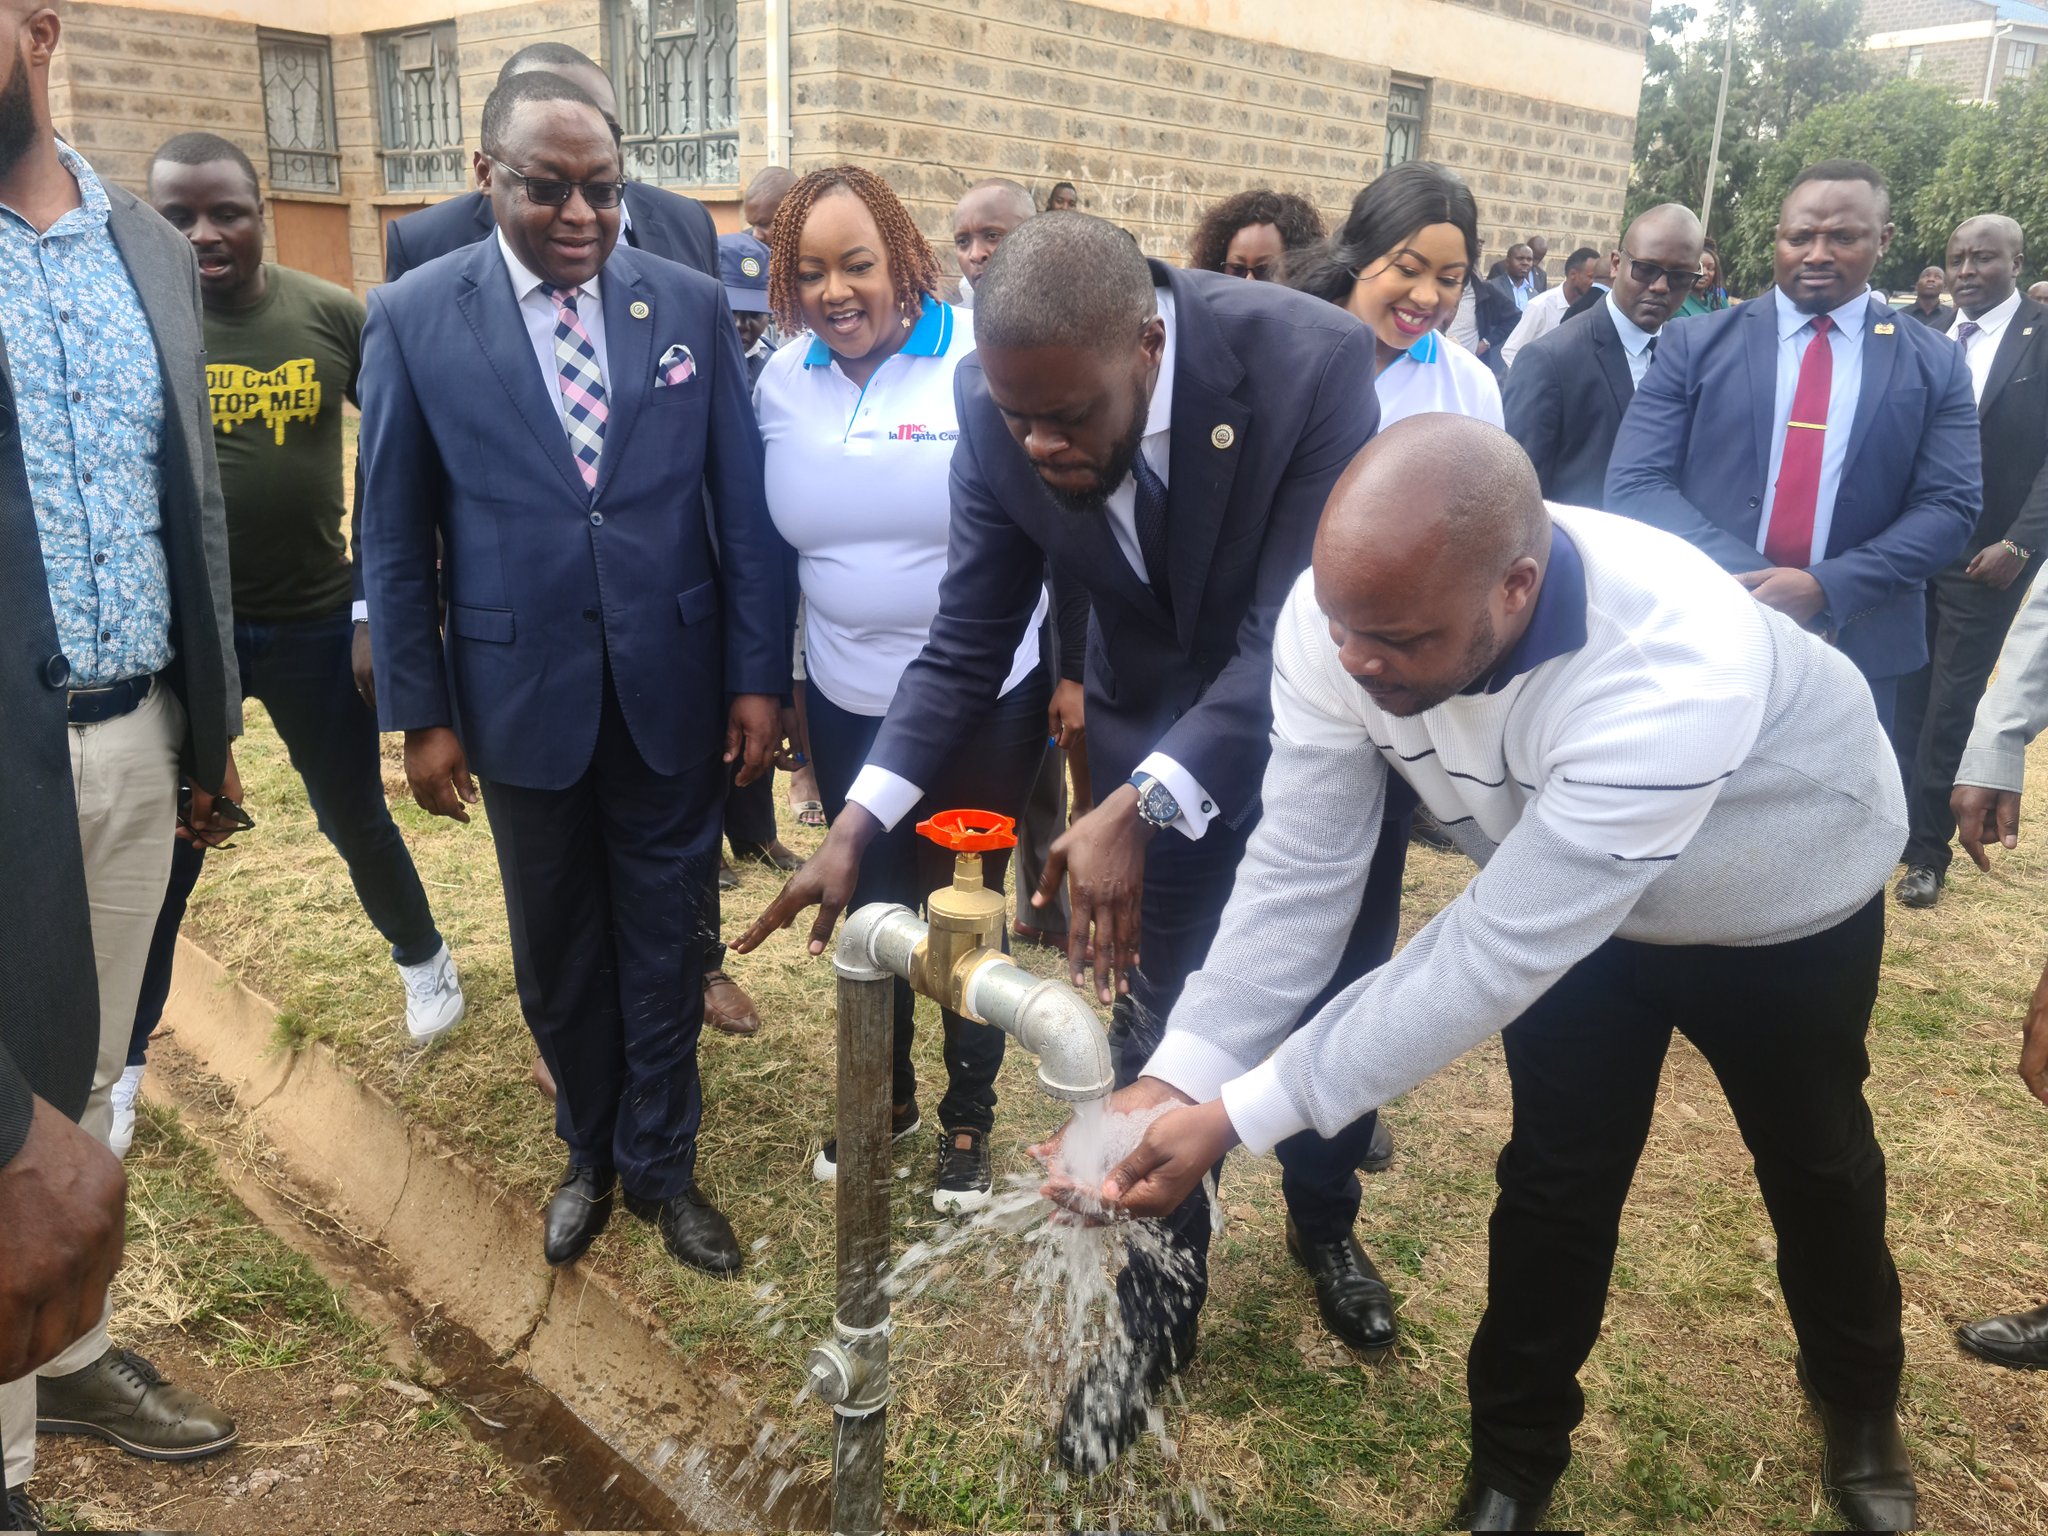 Nairobi water has announced supply interruption in Kibra